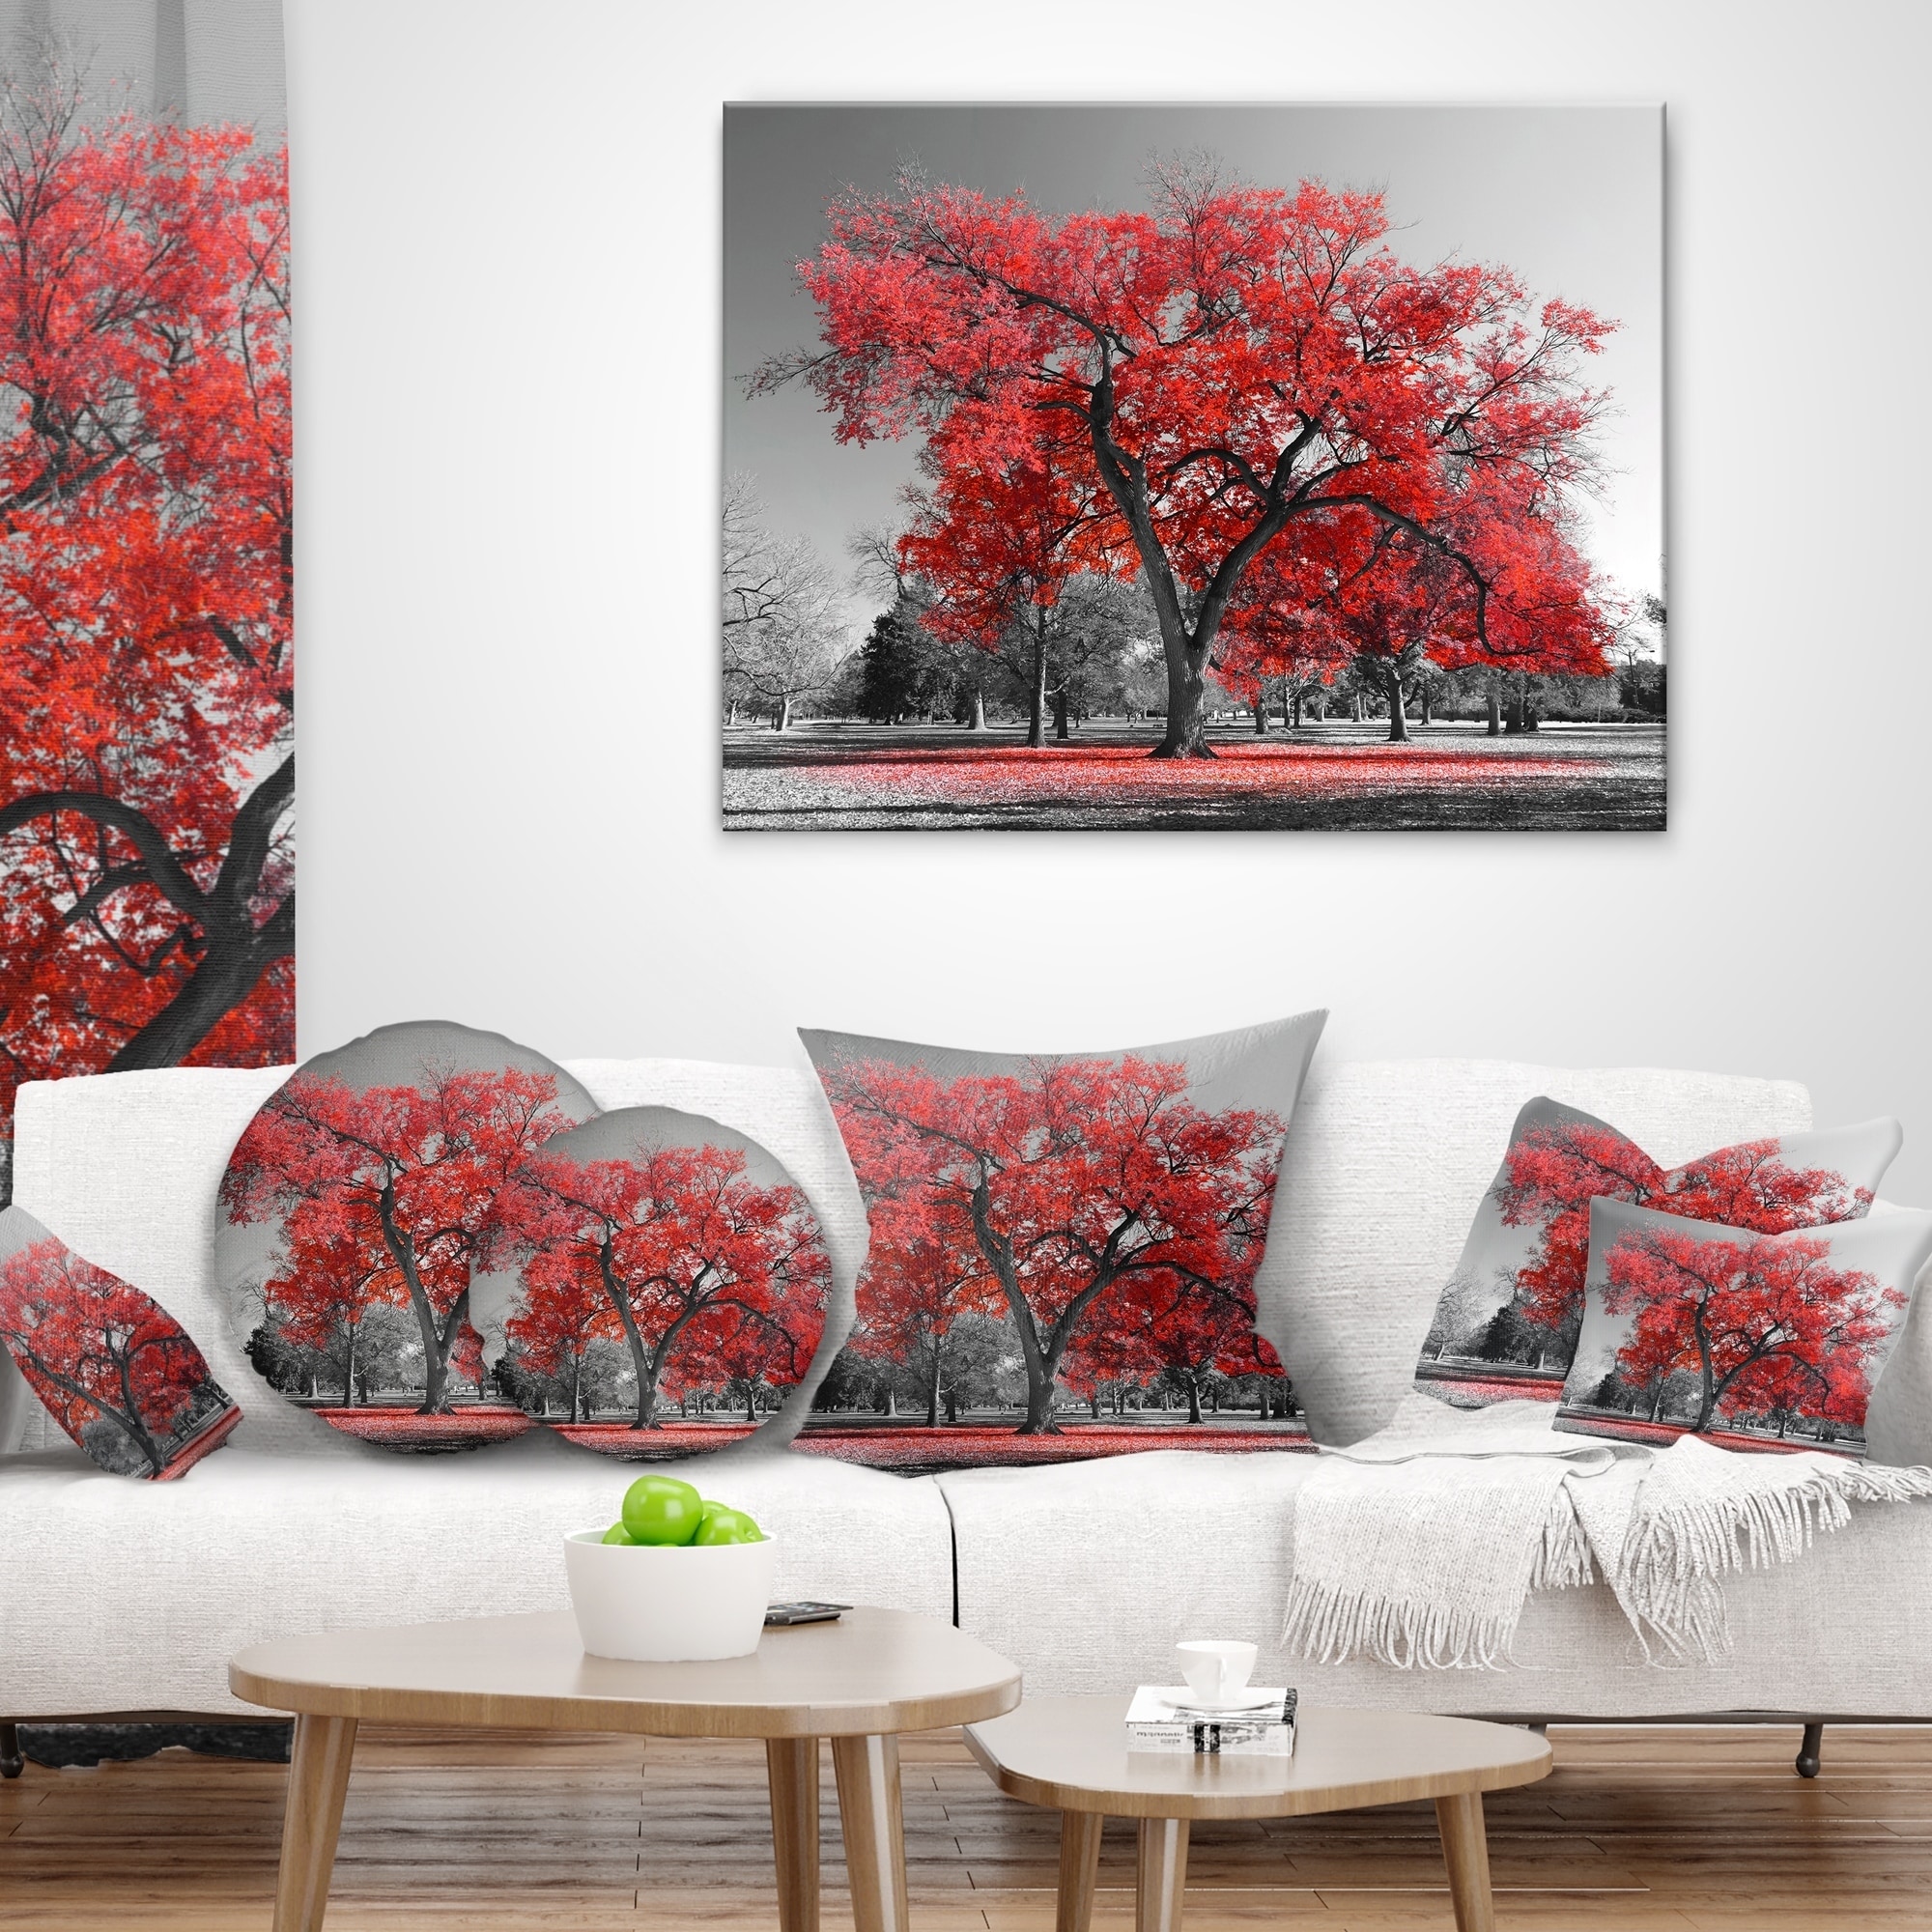 https://ak1.ostkcdn.com/images/products/20890861/Designart-Big-Red-Tree-on-Foggy-Day-Landscape-Printed-Throw-Pillow-abc1ffd9-2737-467b-840a-ee7d5af9c838.jpg